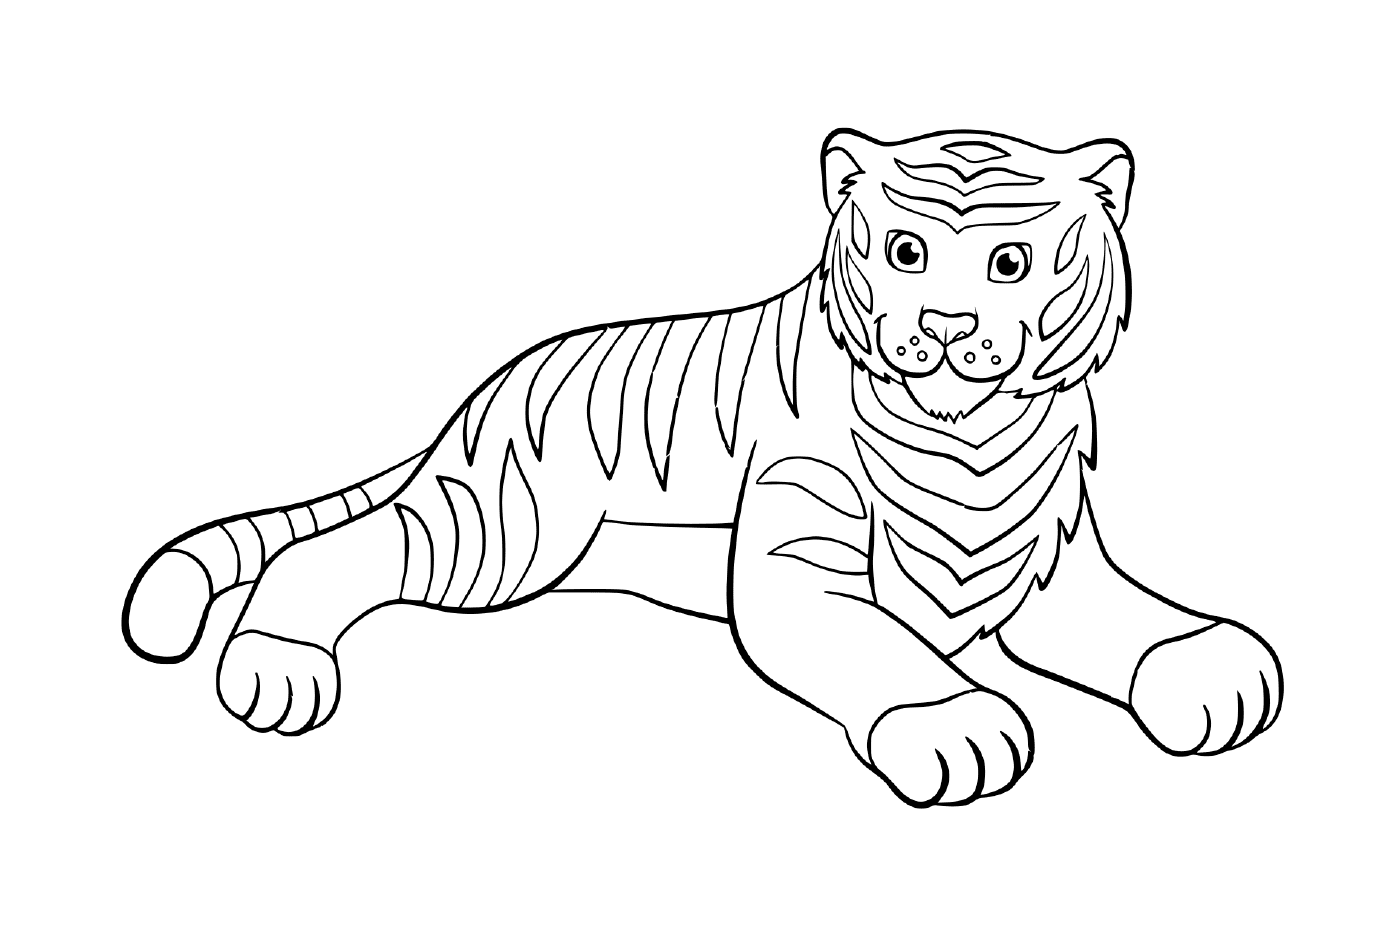  A lovely tiger on rest 